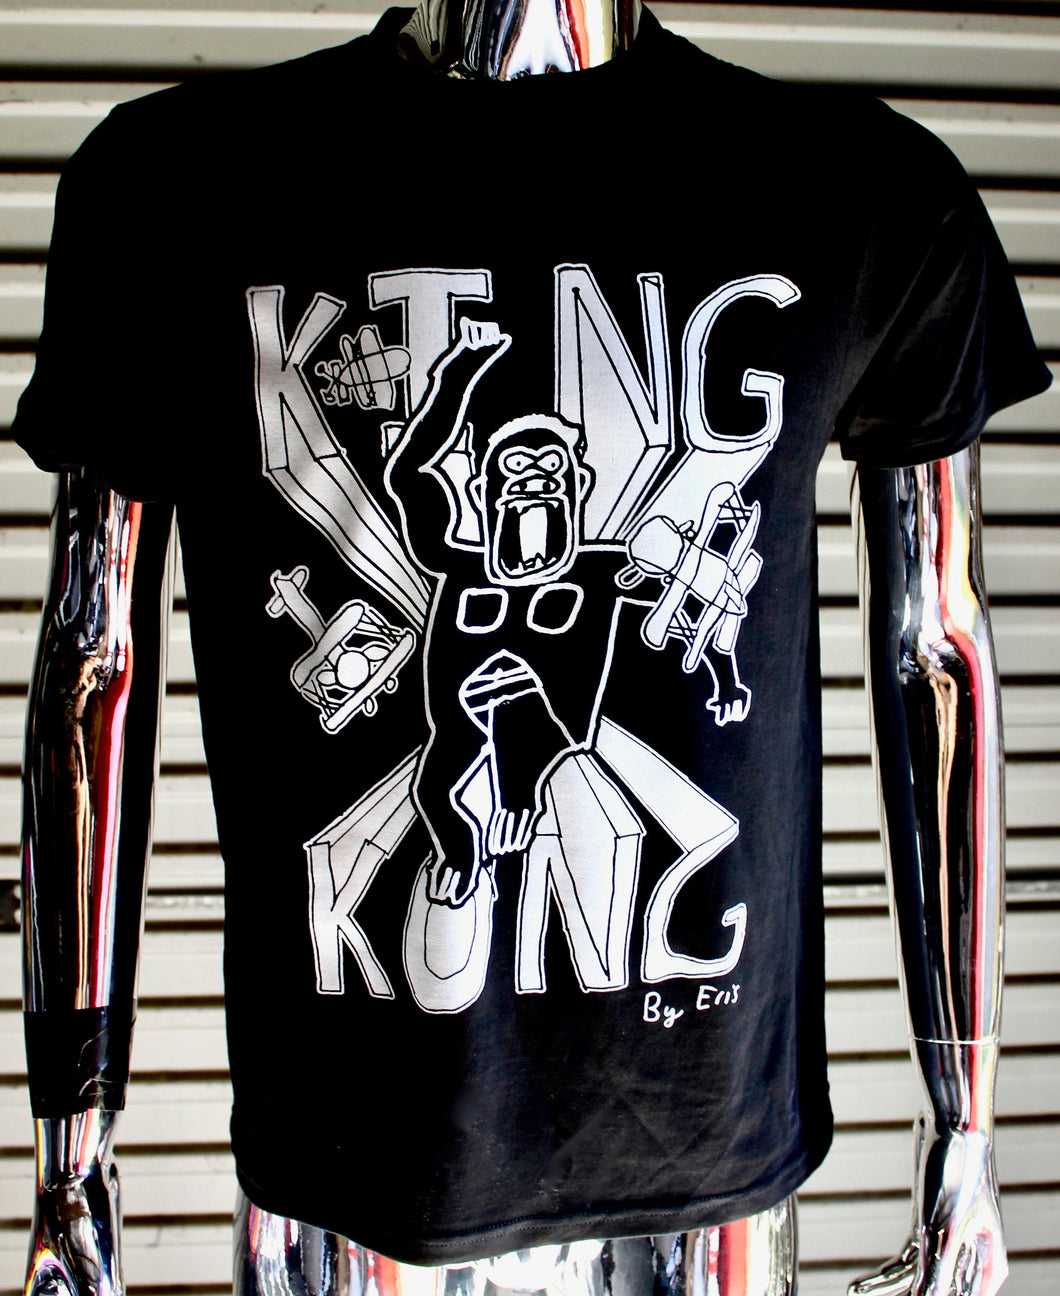 King Kong by Eris t-shirt